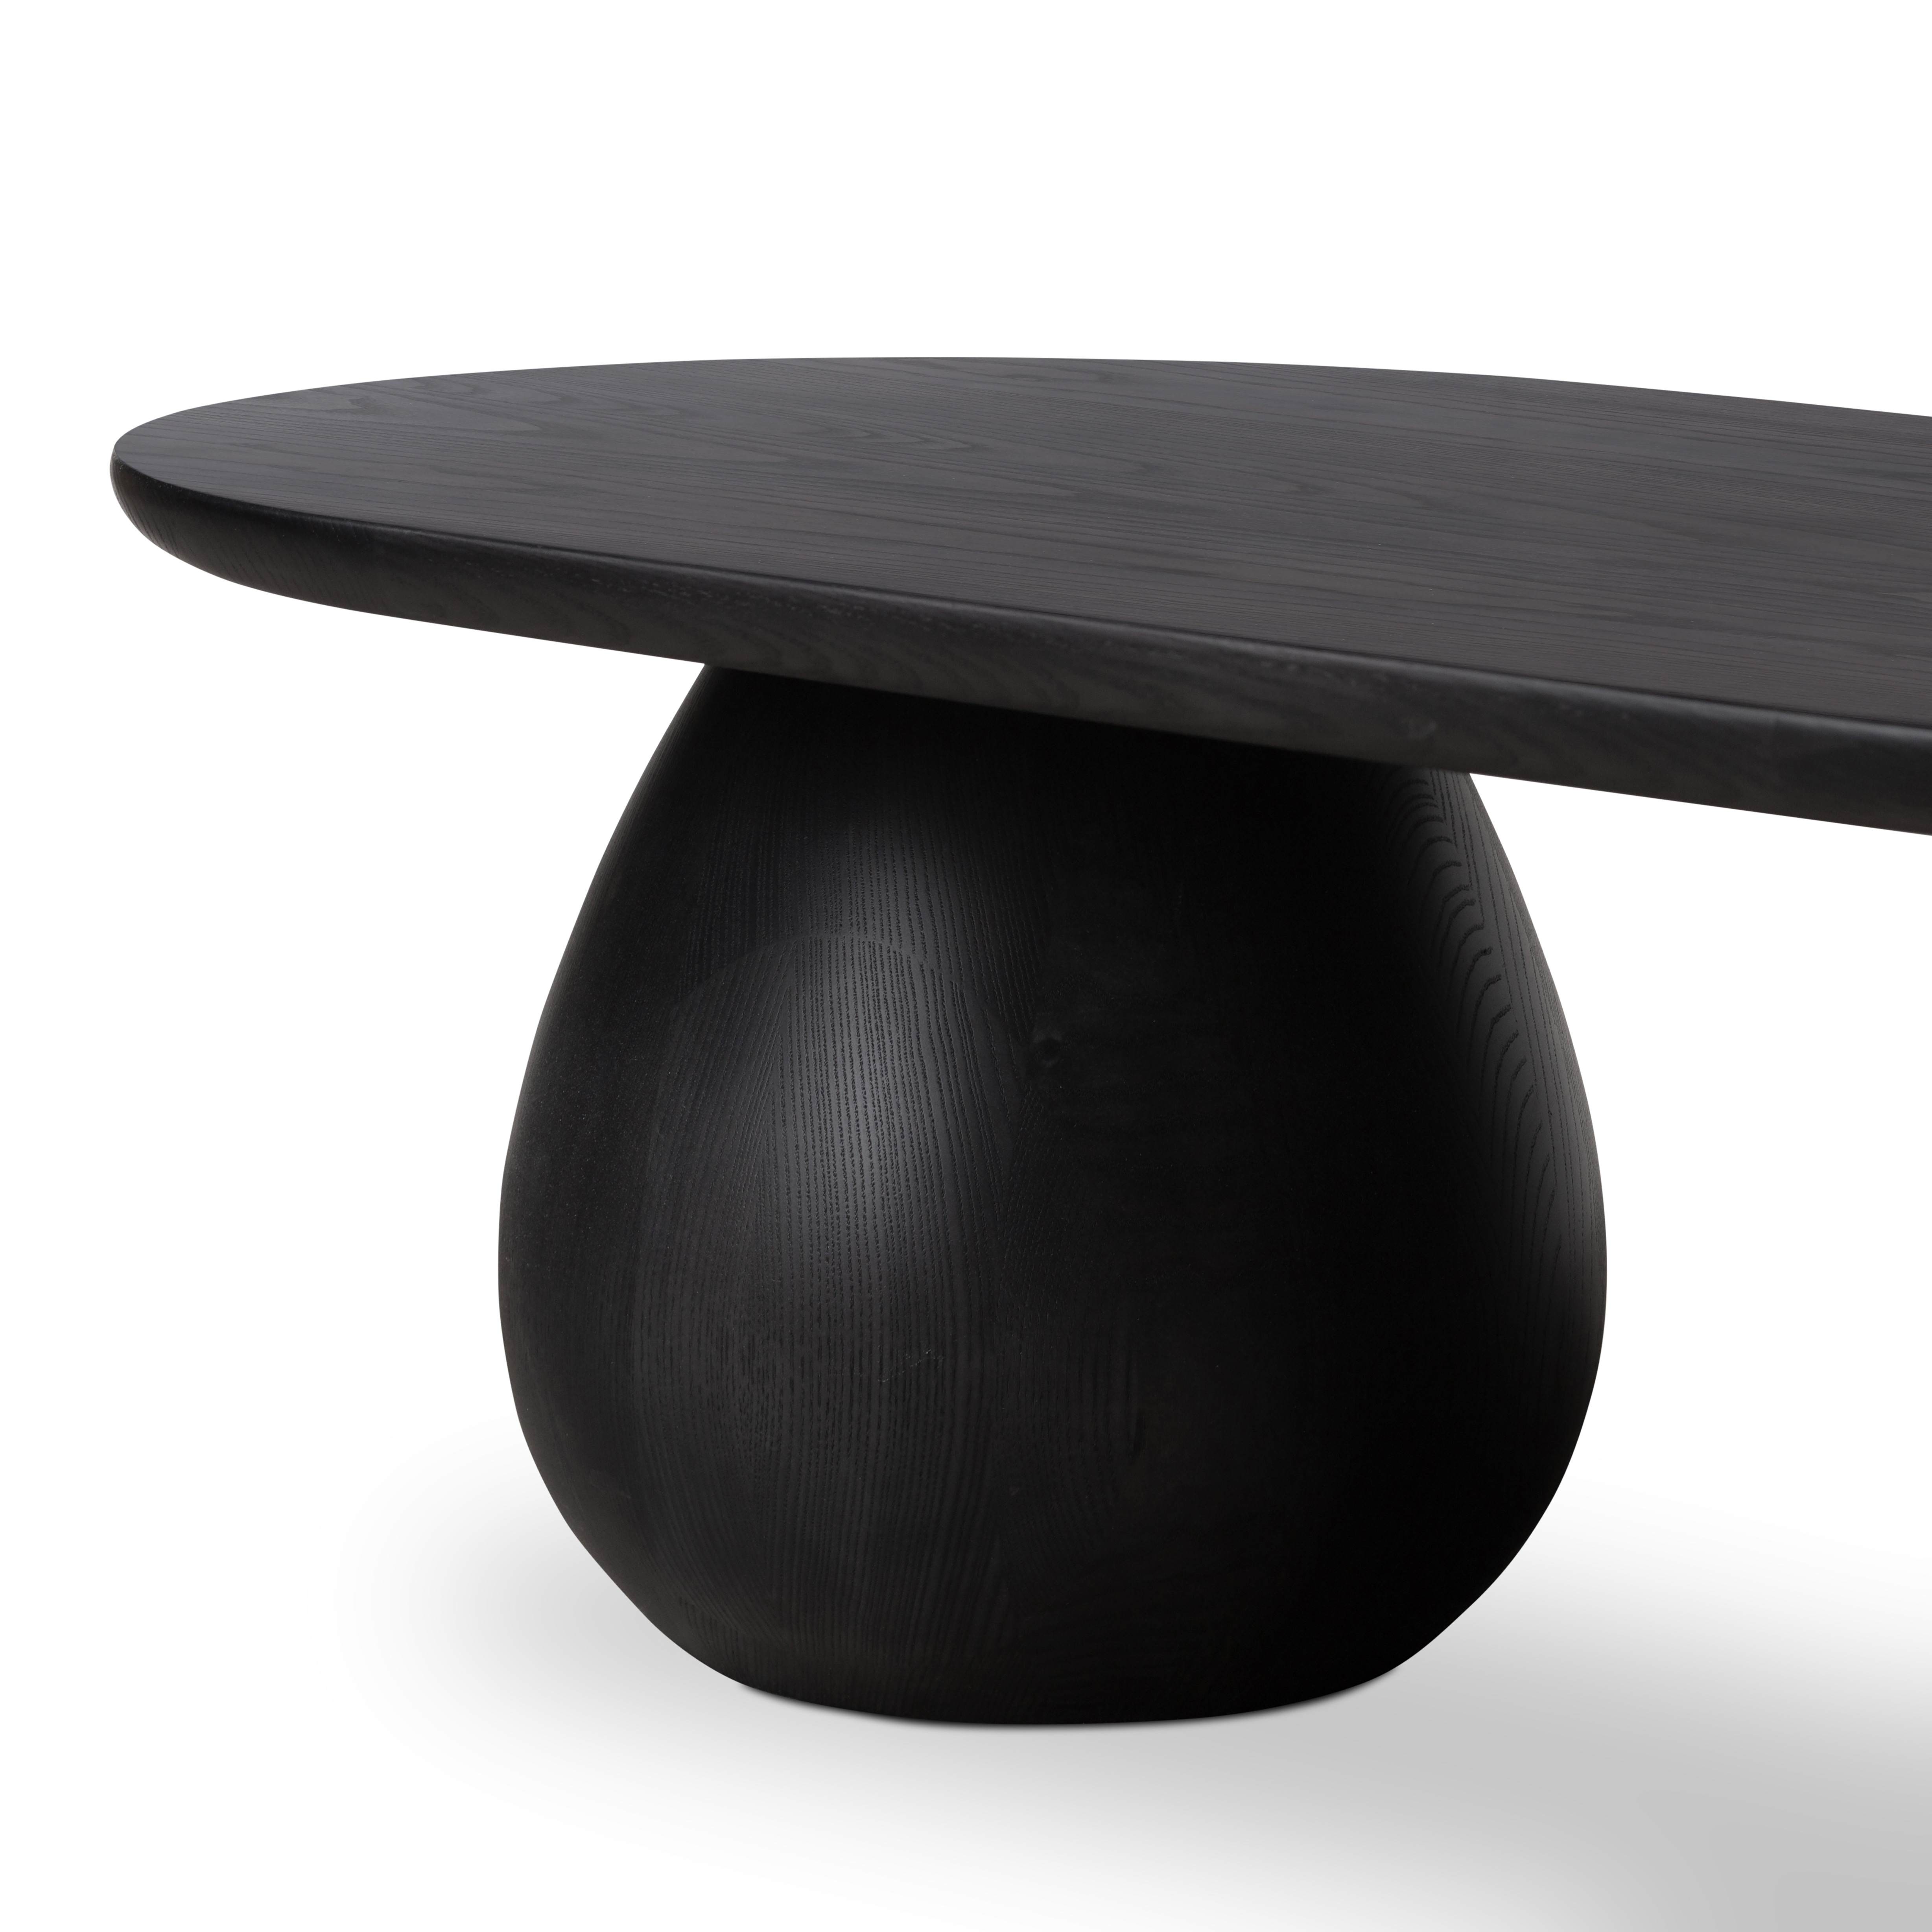 Merla Wood Coffee Table-Black Wash Ash - Image 6